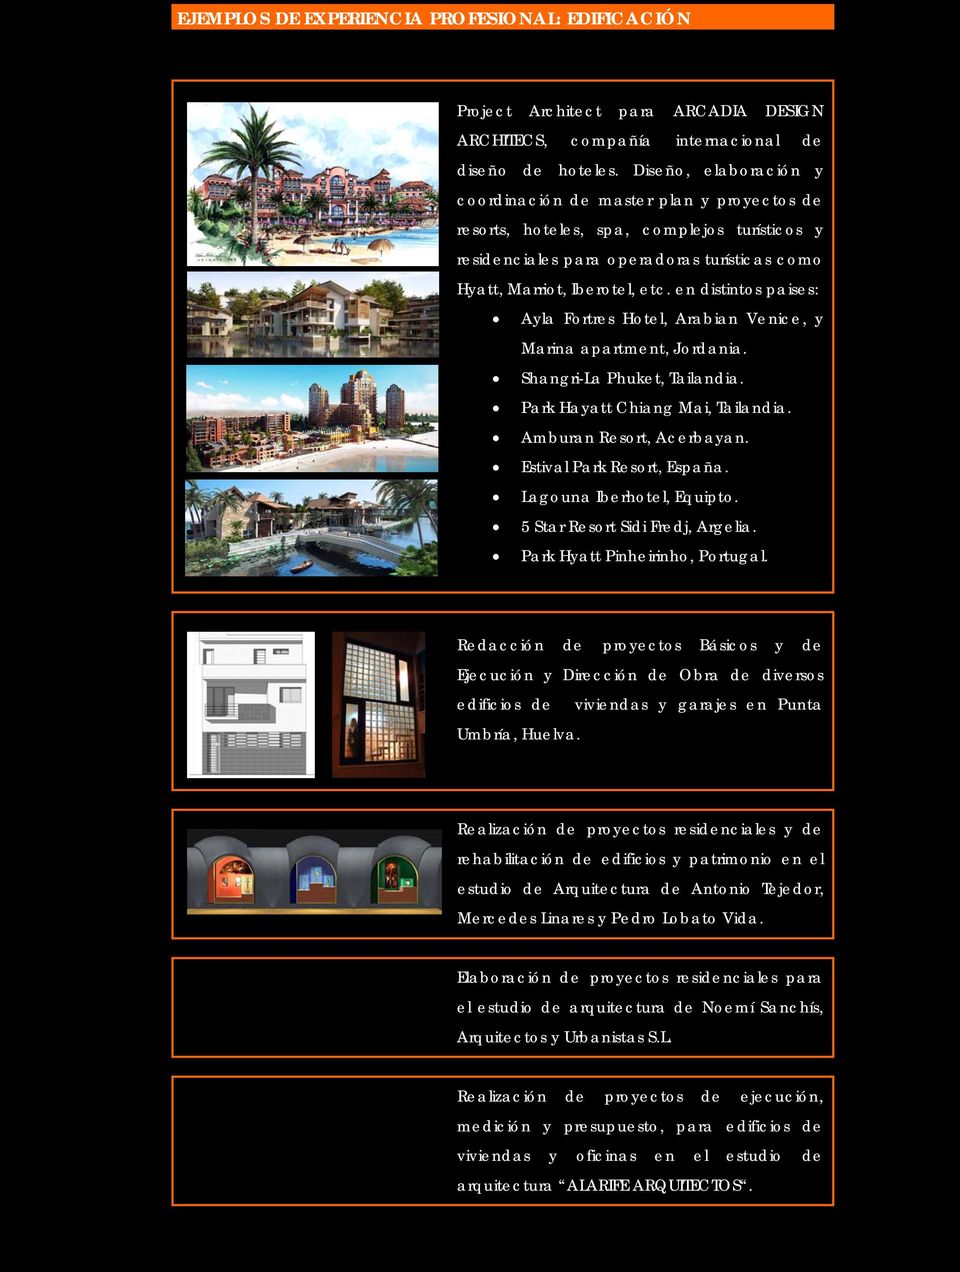 en distintos paises: Ayla Fortres Hotel, Arabian Venice, y Marina apartment, Jordania. Shangri-La Phuket, Tailandia. Park Hayatt Chiang Mai, Tailandia. Amburan Resort, Acerbayan.